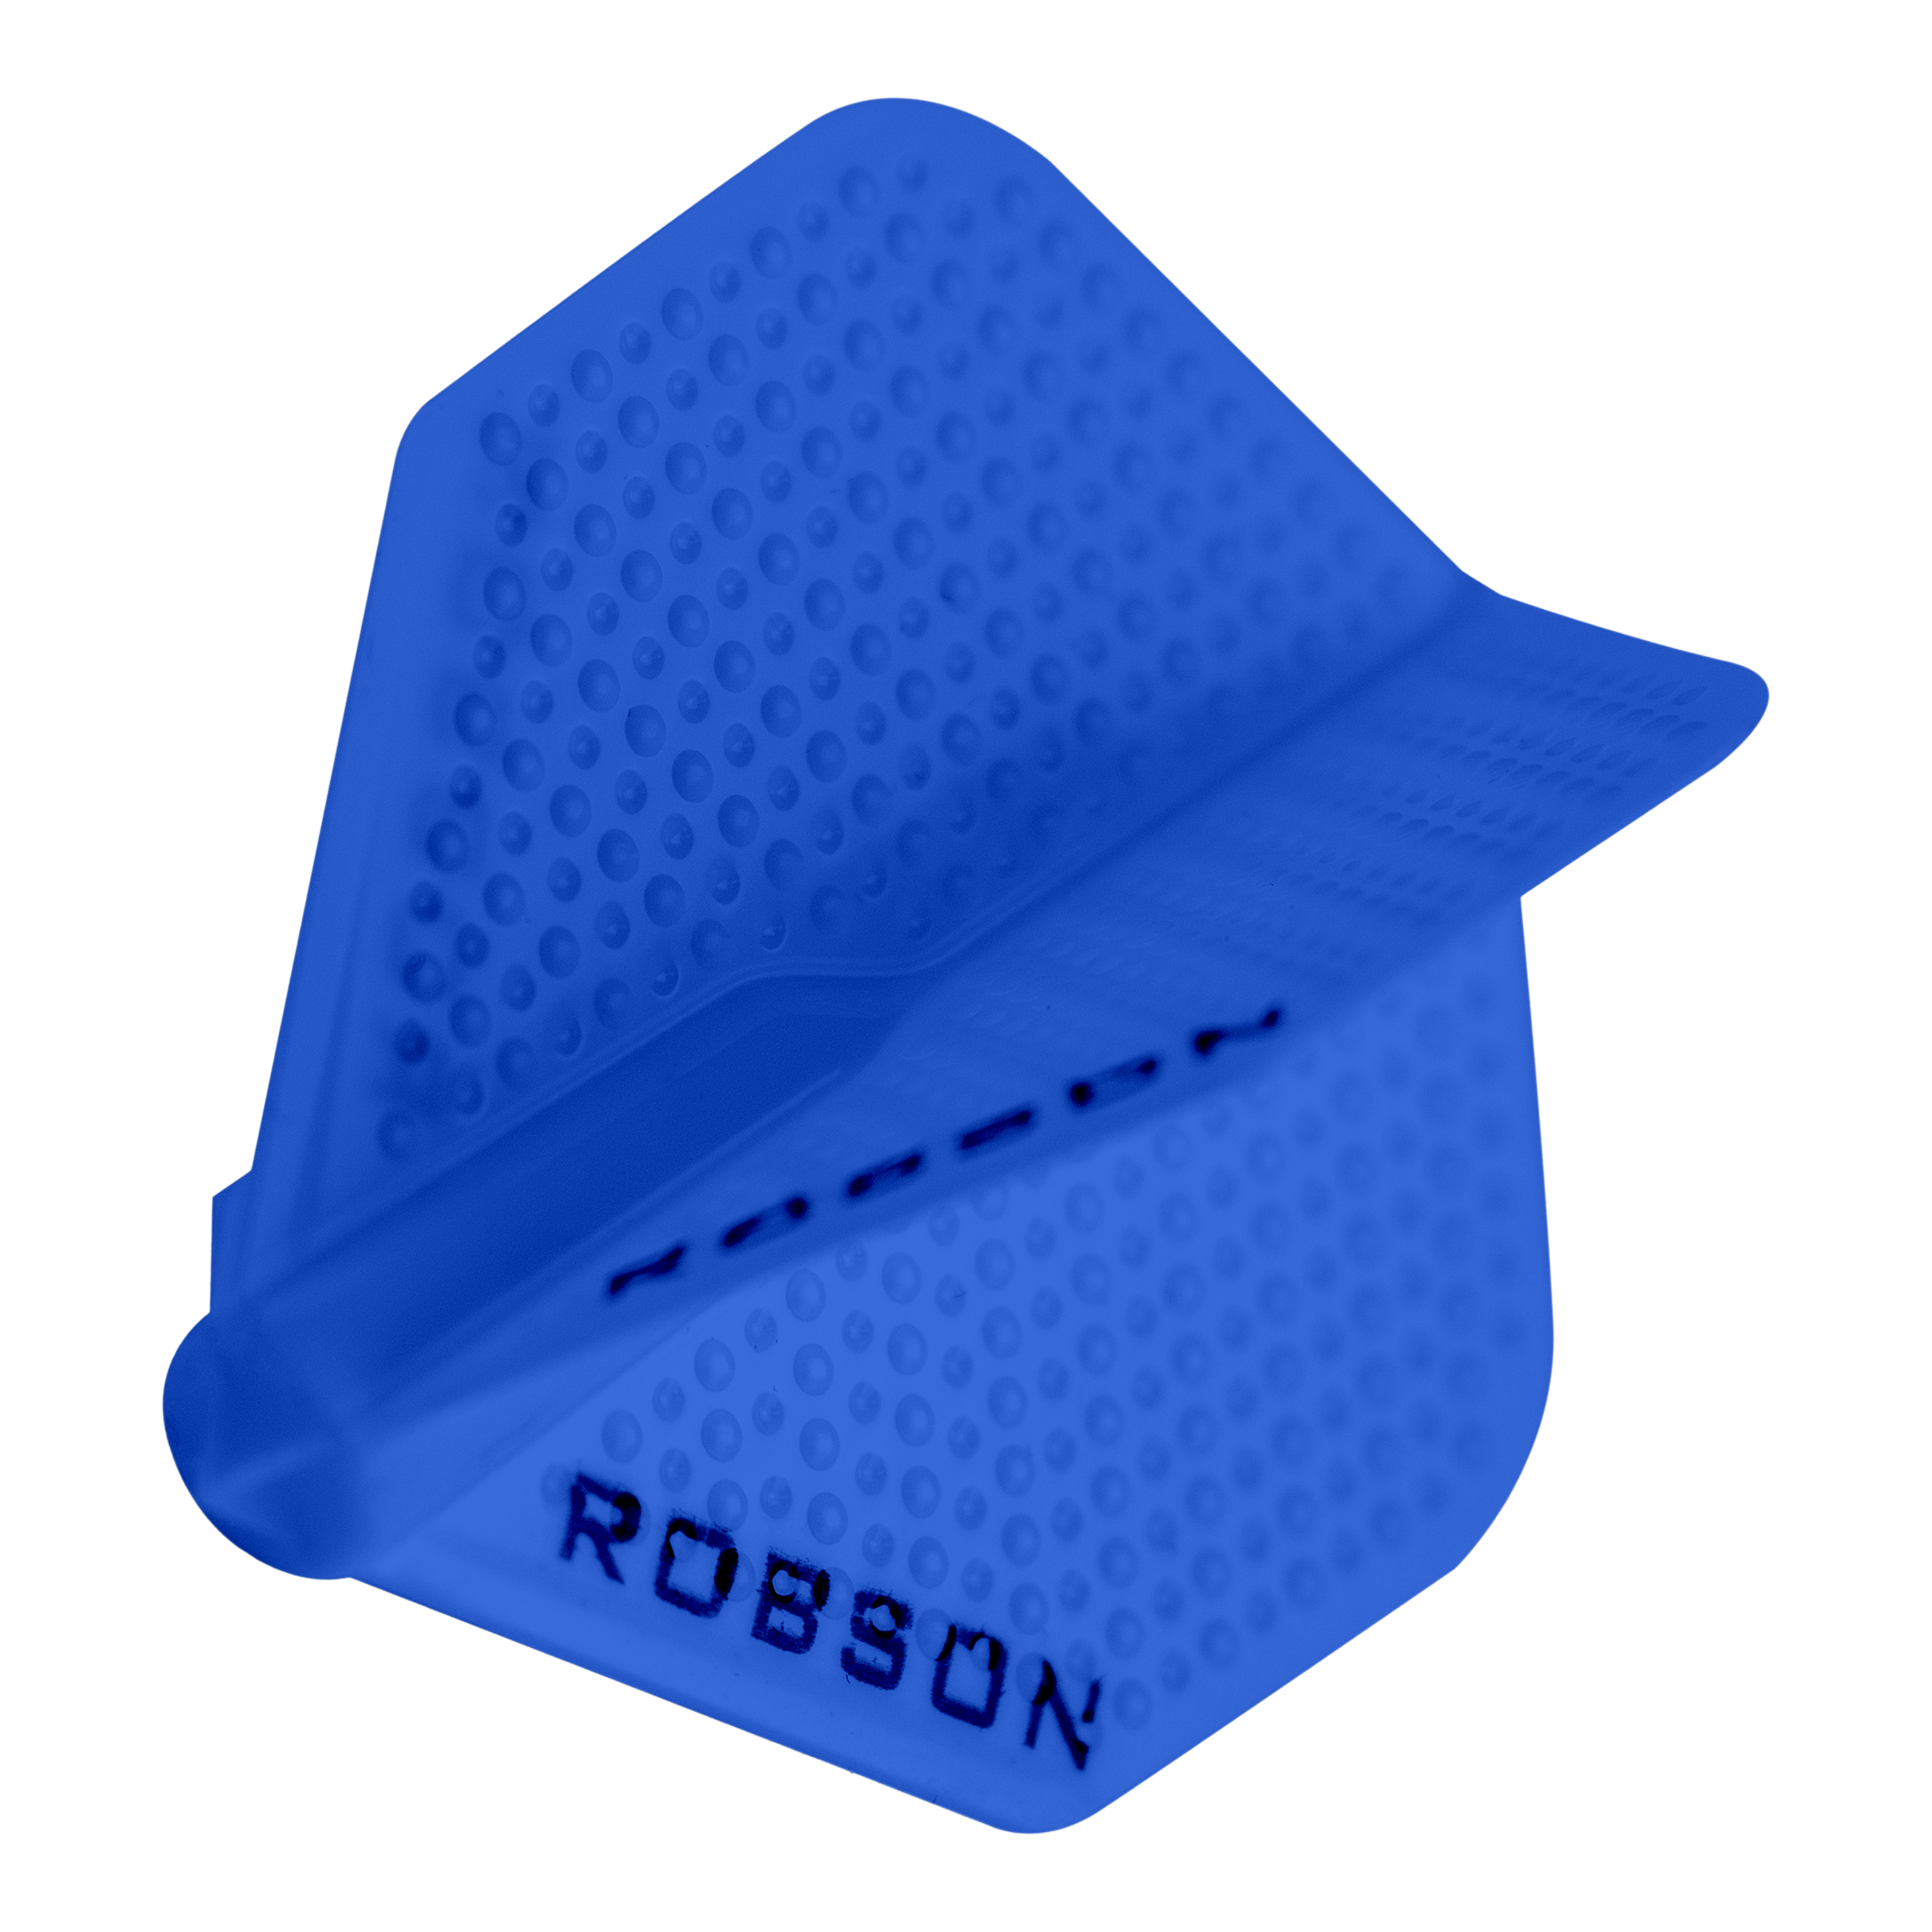 Plumas con hoyuelos Robson Plus - Azul